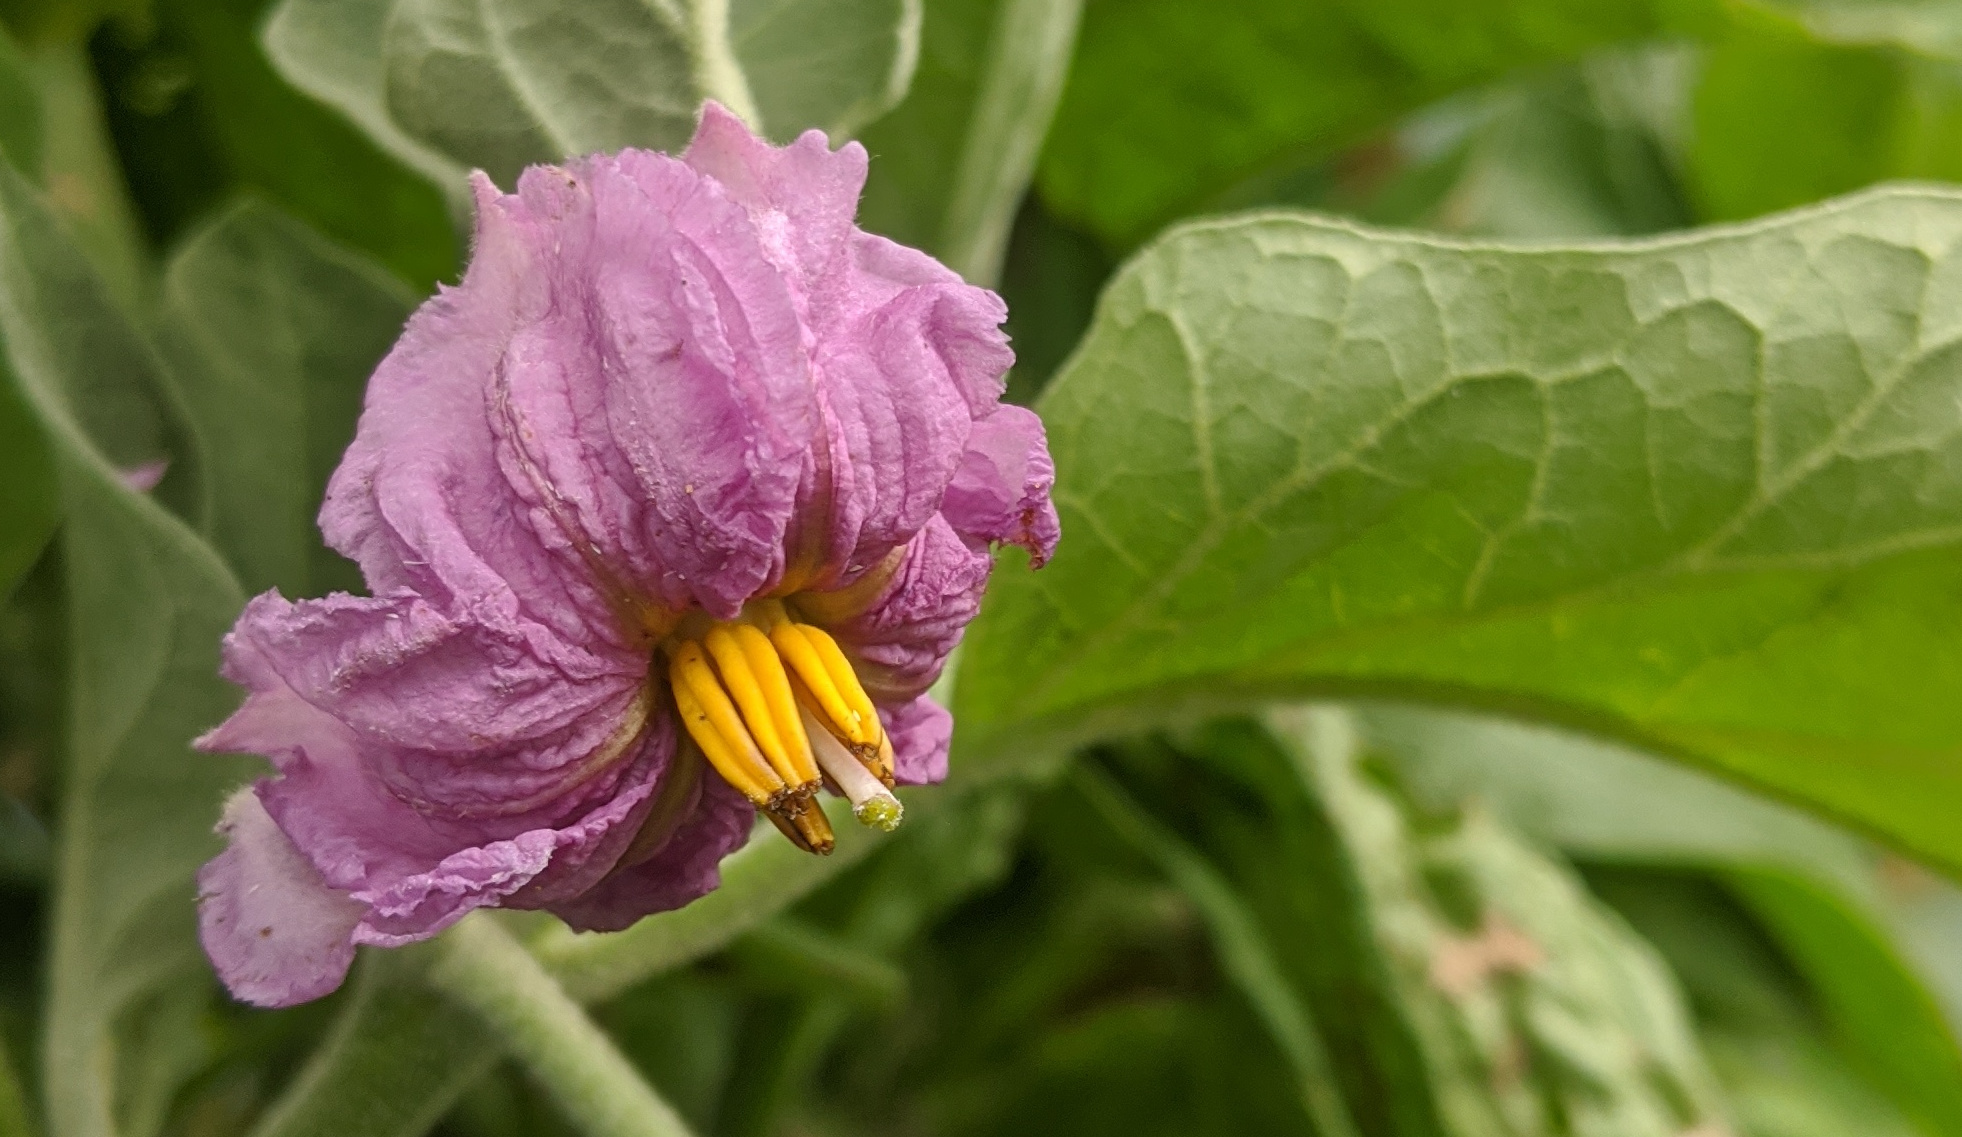 An aubergine flower